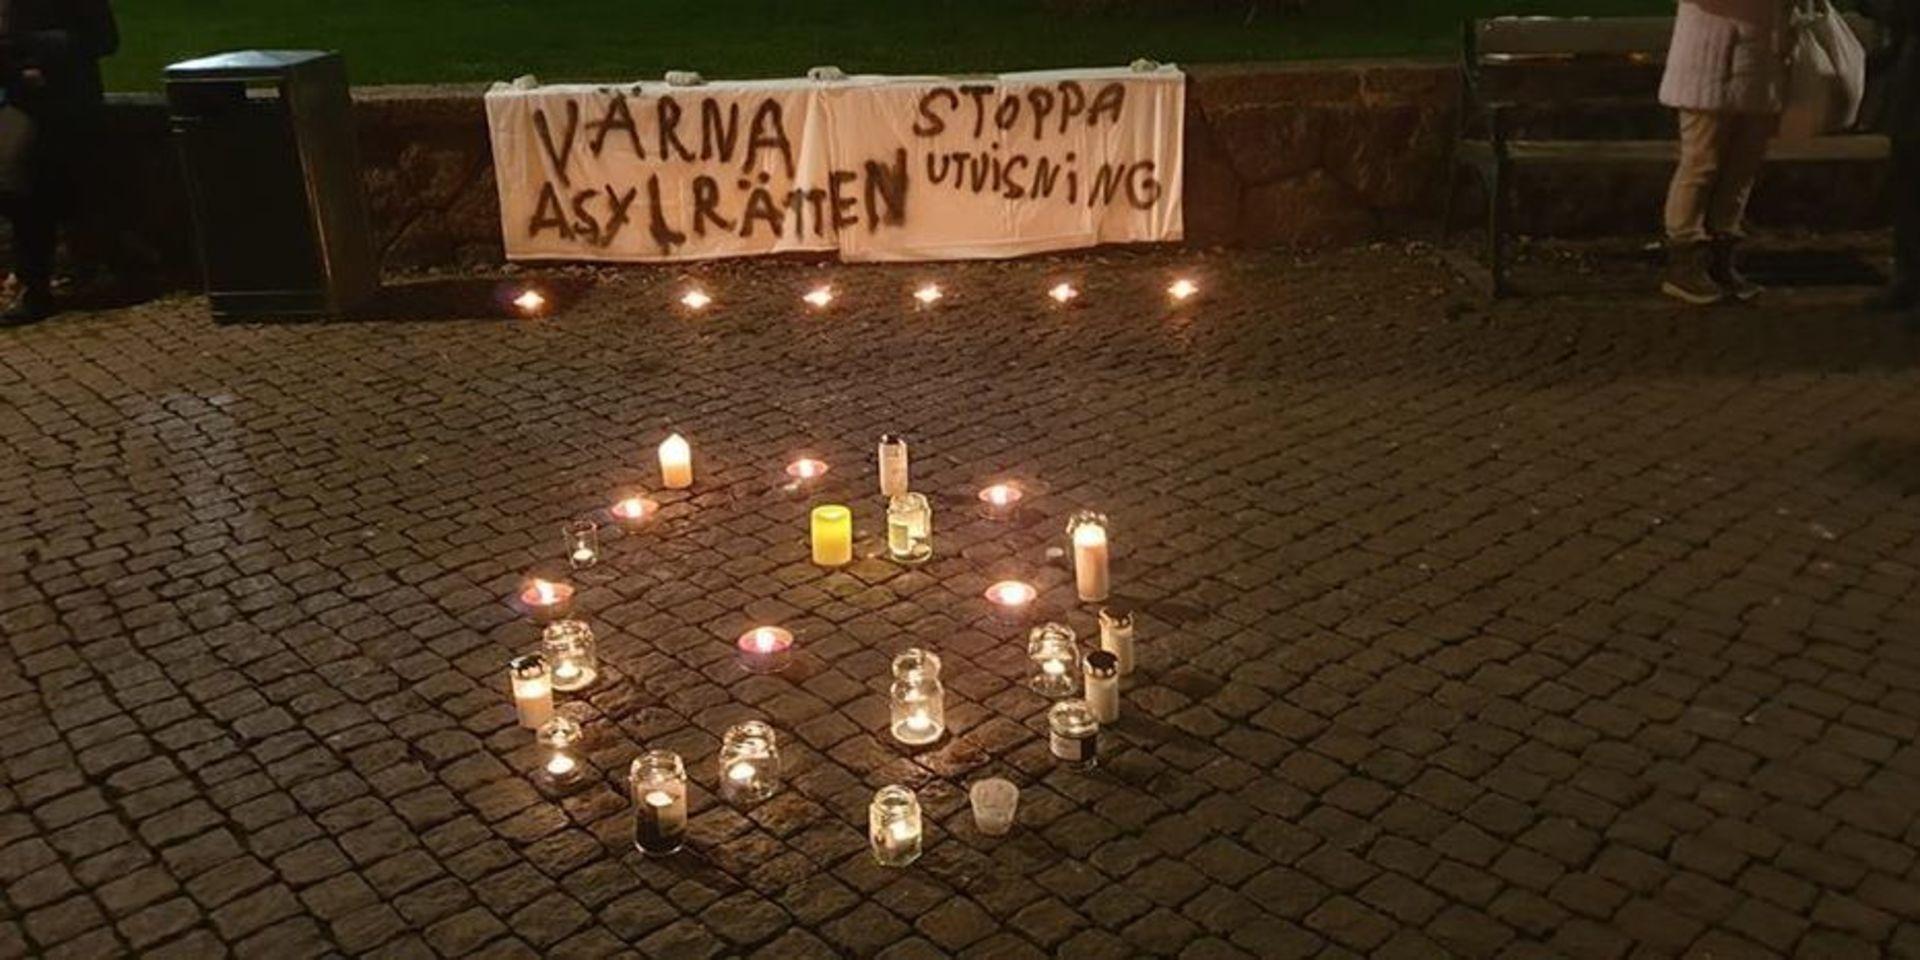 Den 24/11 var det en manifestation över hela landet, i Varberg hölls den på torget.